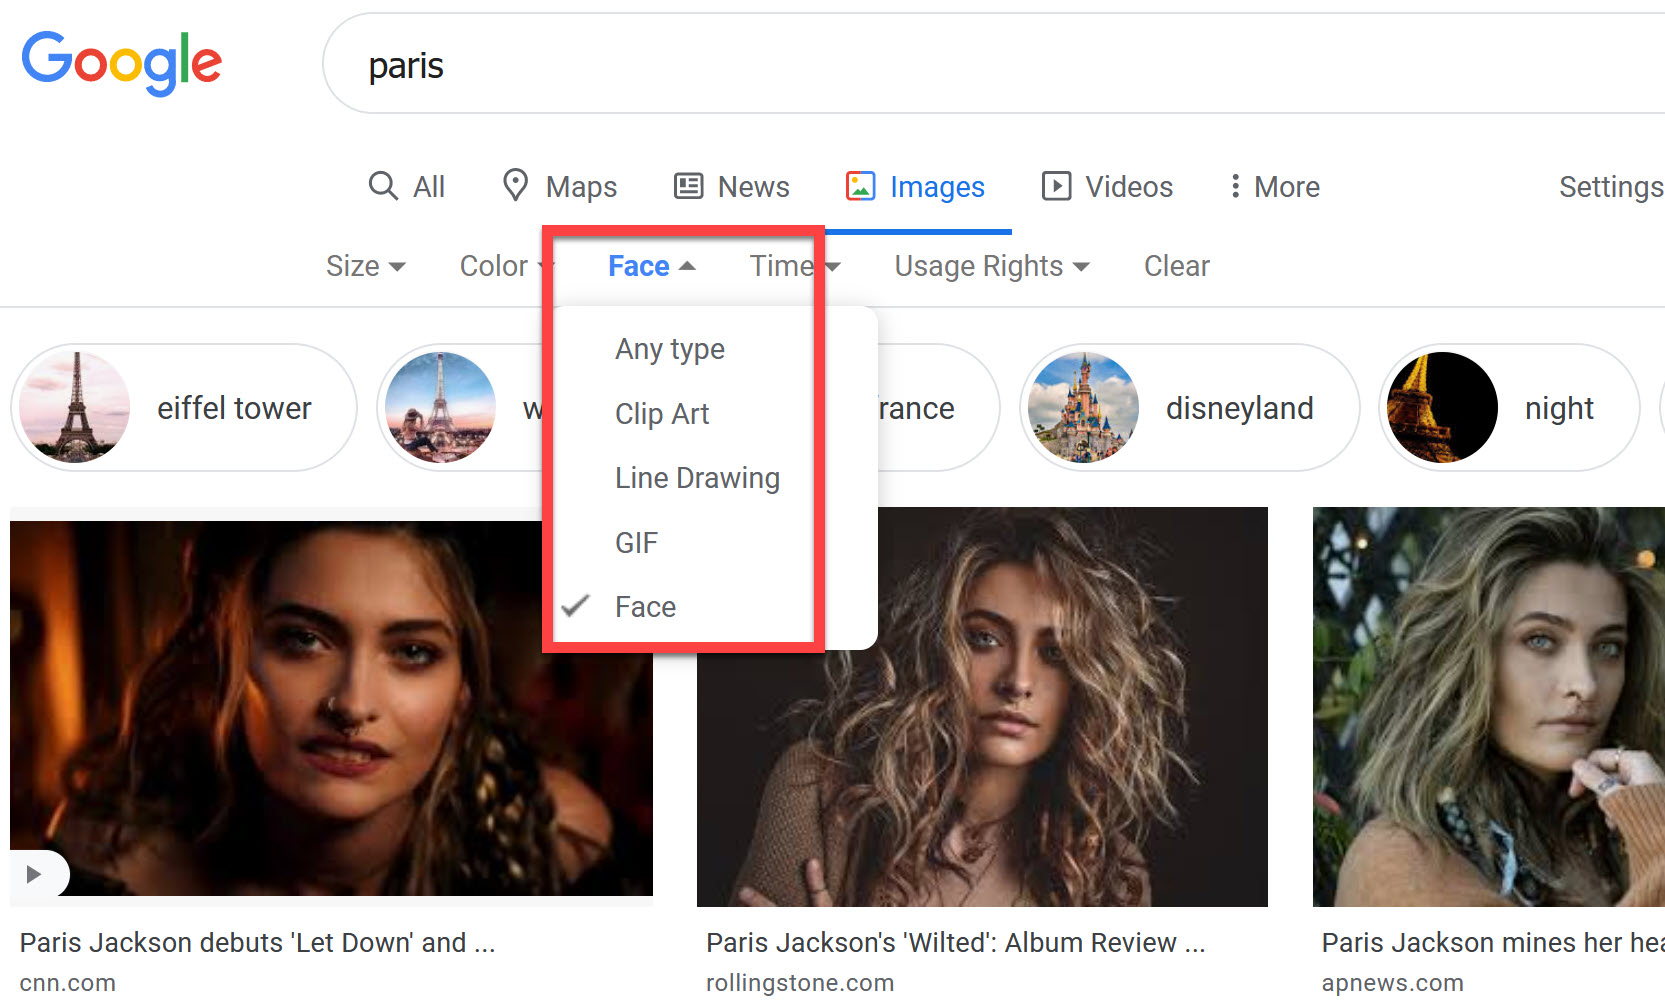 How to do a face search in Google Photos?